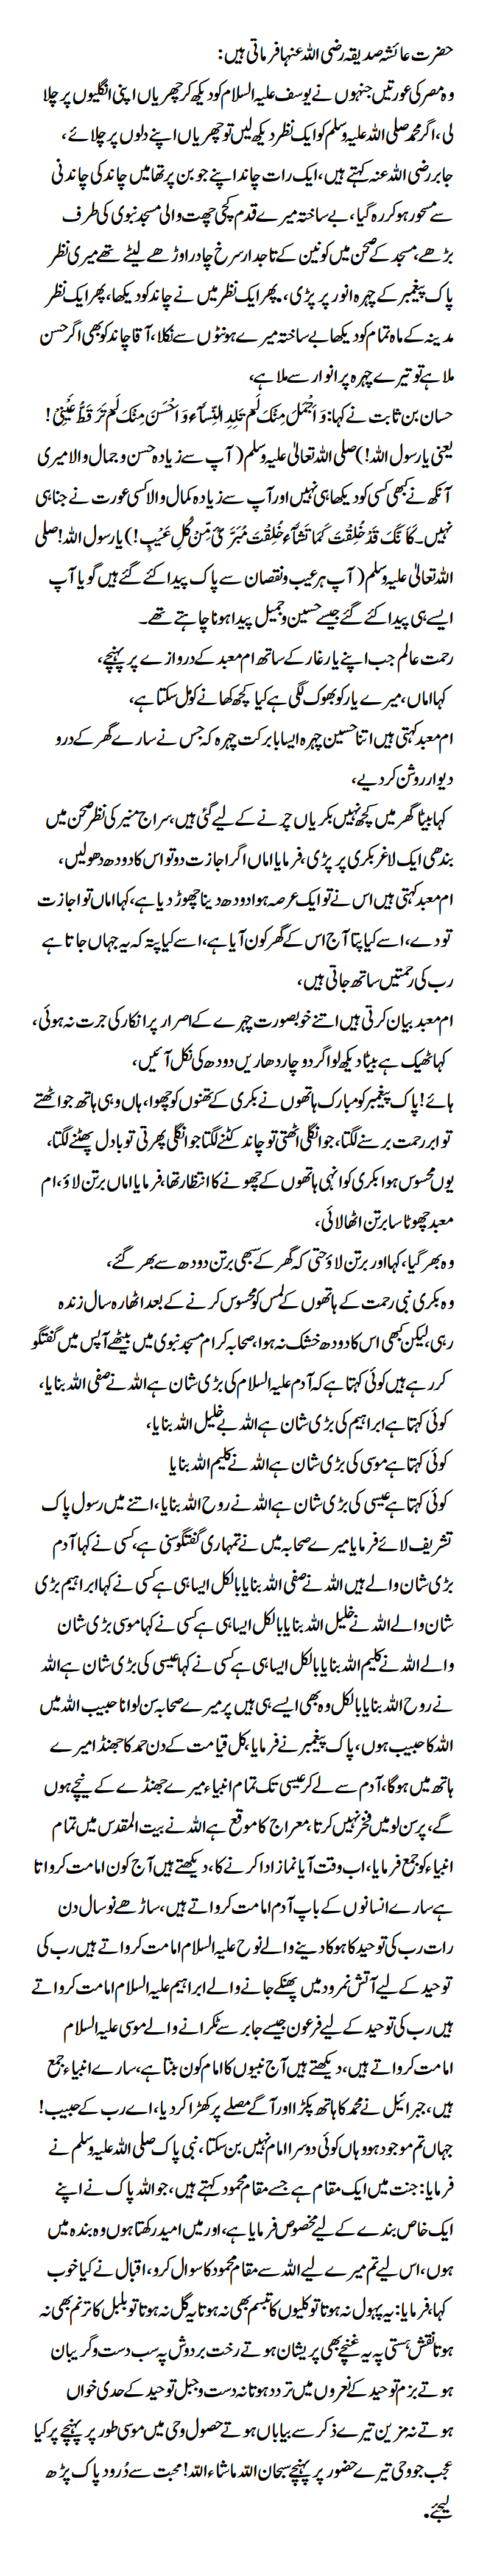 Hazrat Ayesha Siddiqa (RA) says: